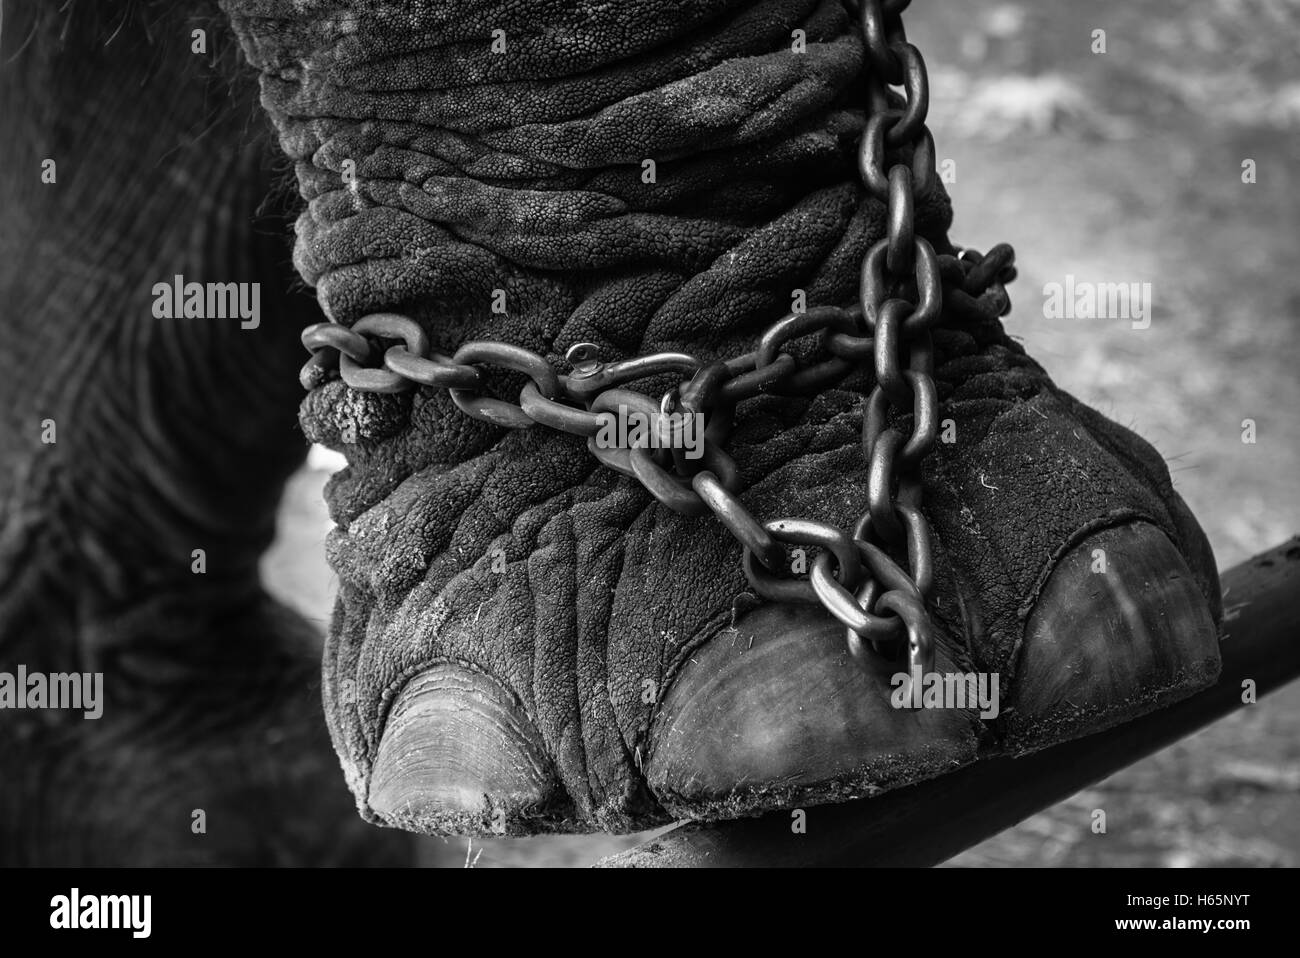 Elephant chained. Closeup of the big feet of an elephant. Stock Photo